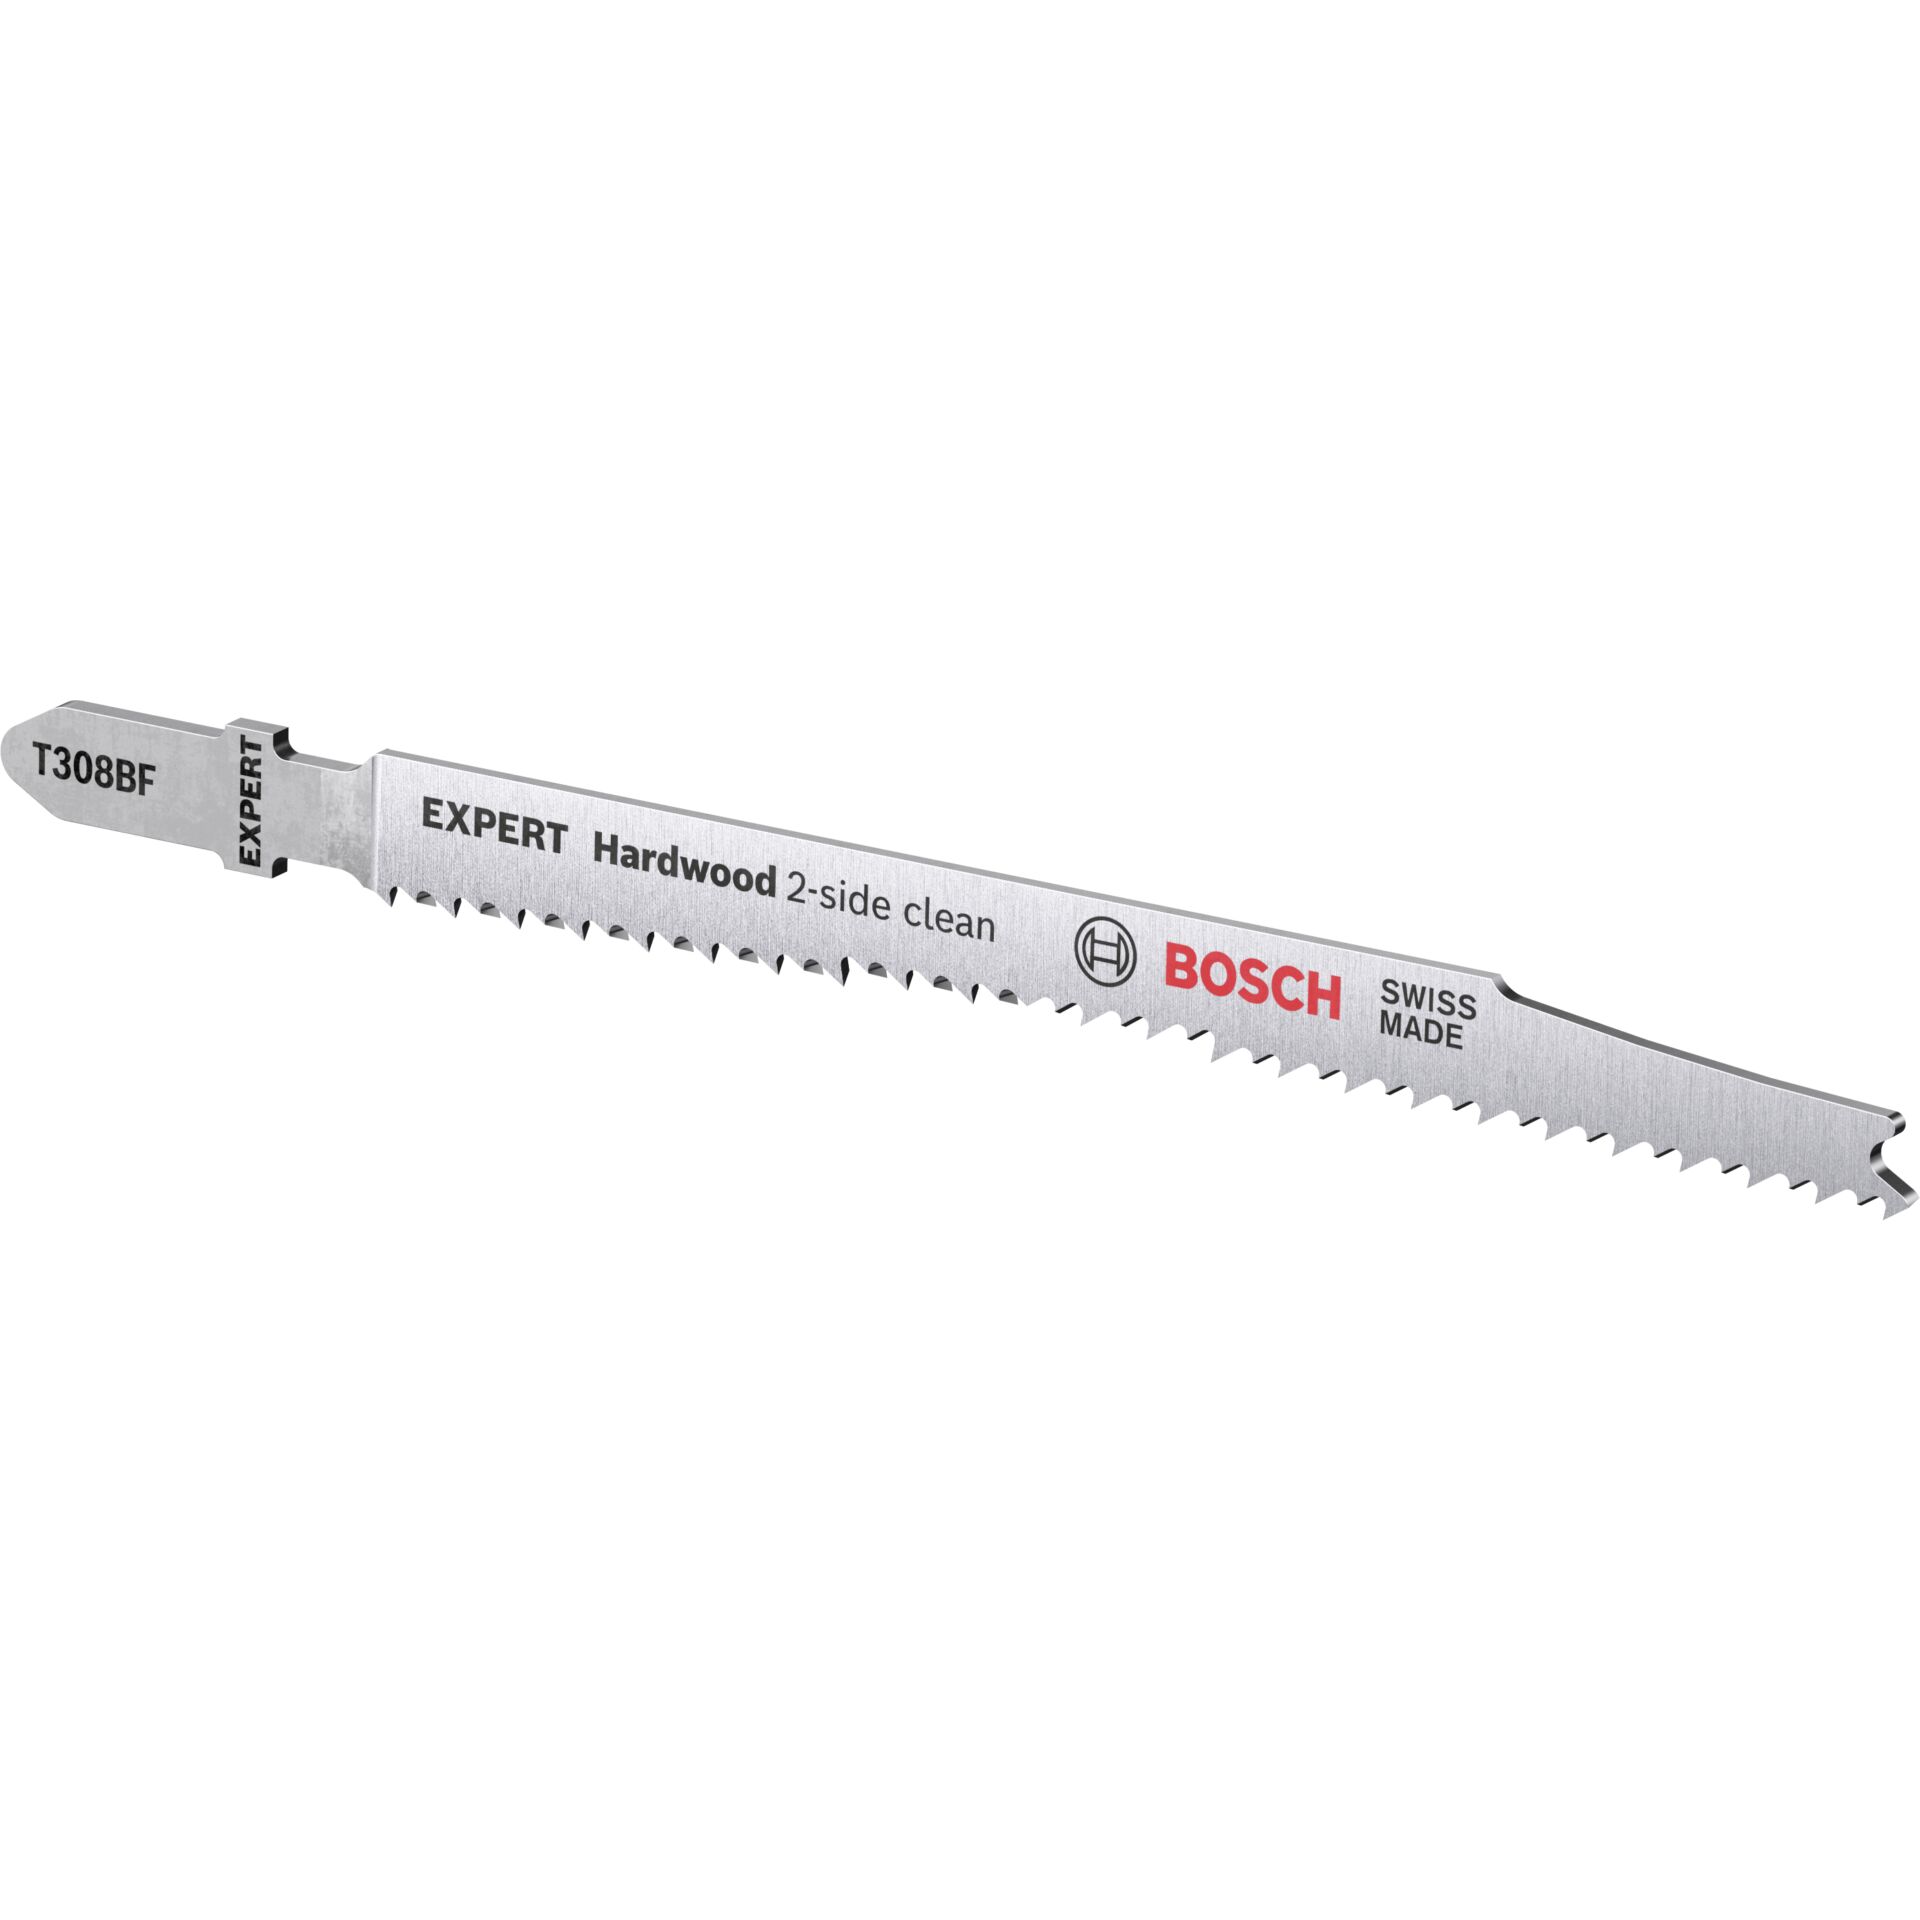 Bosch EXPERT jigsaw blades T308BF Hardwood 2-side clean